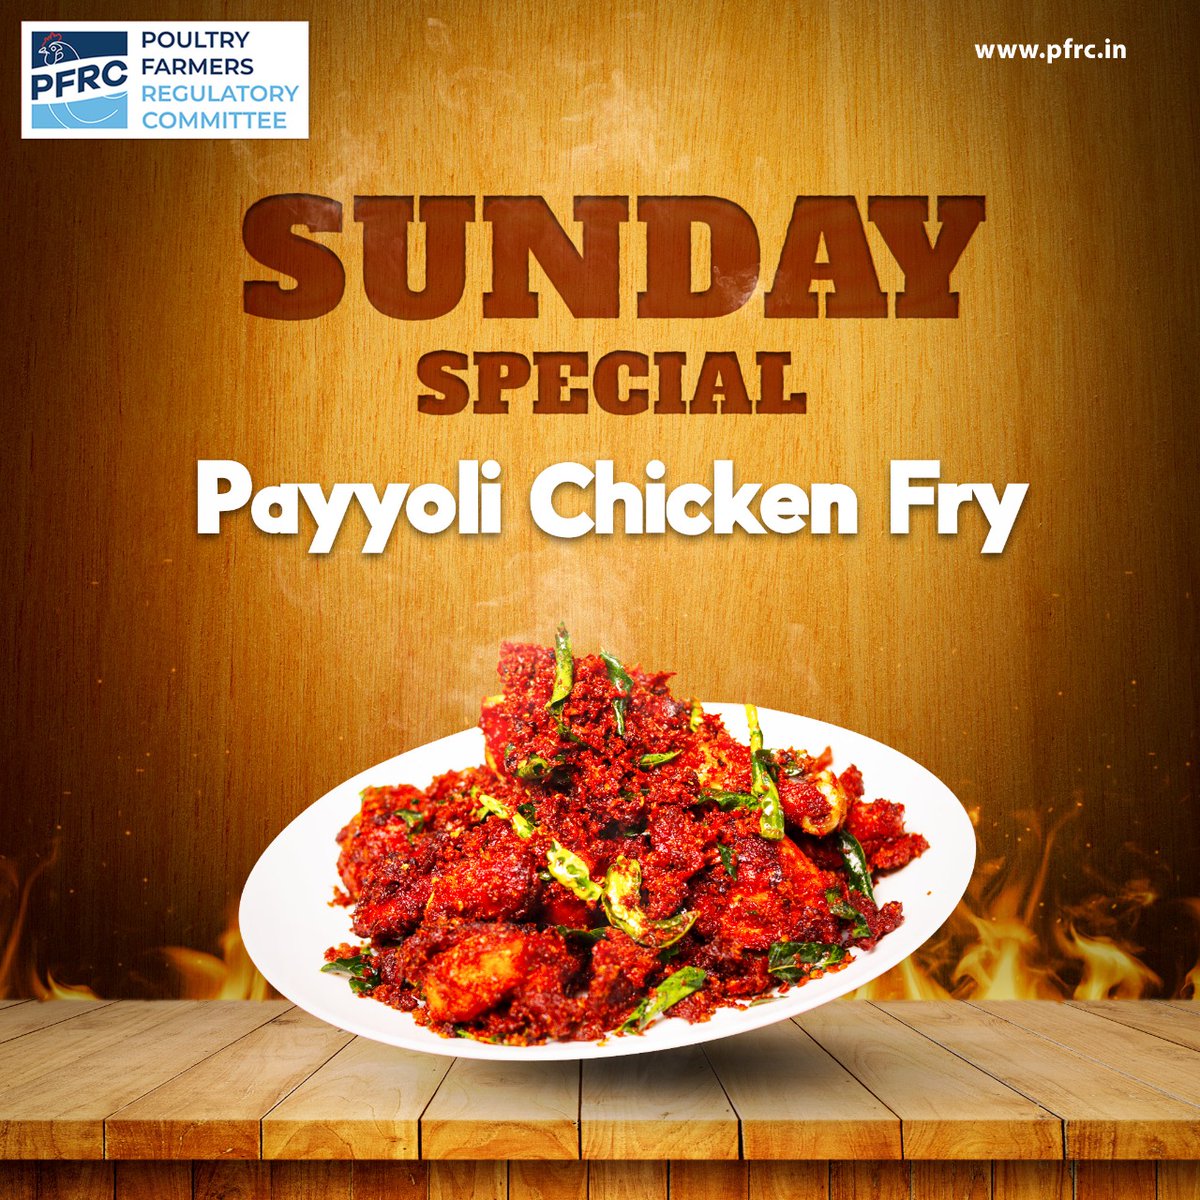 Enjoy this Sunday in a Healthy & Tasty Way with Payyoli Chicken Fry!

Recipe Video 👇👇👇

fb.watch/c819SASyAl/

youtu.be/WV2CCTXc2bM

#PFRC #PFRCTN #Tasty #Farm #Chicken #Sunday #FoodLover #HealthyFood #ChickenRecipe #SundaySpecial #PayyoliChickenFry